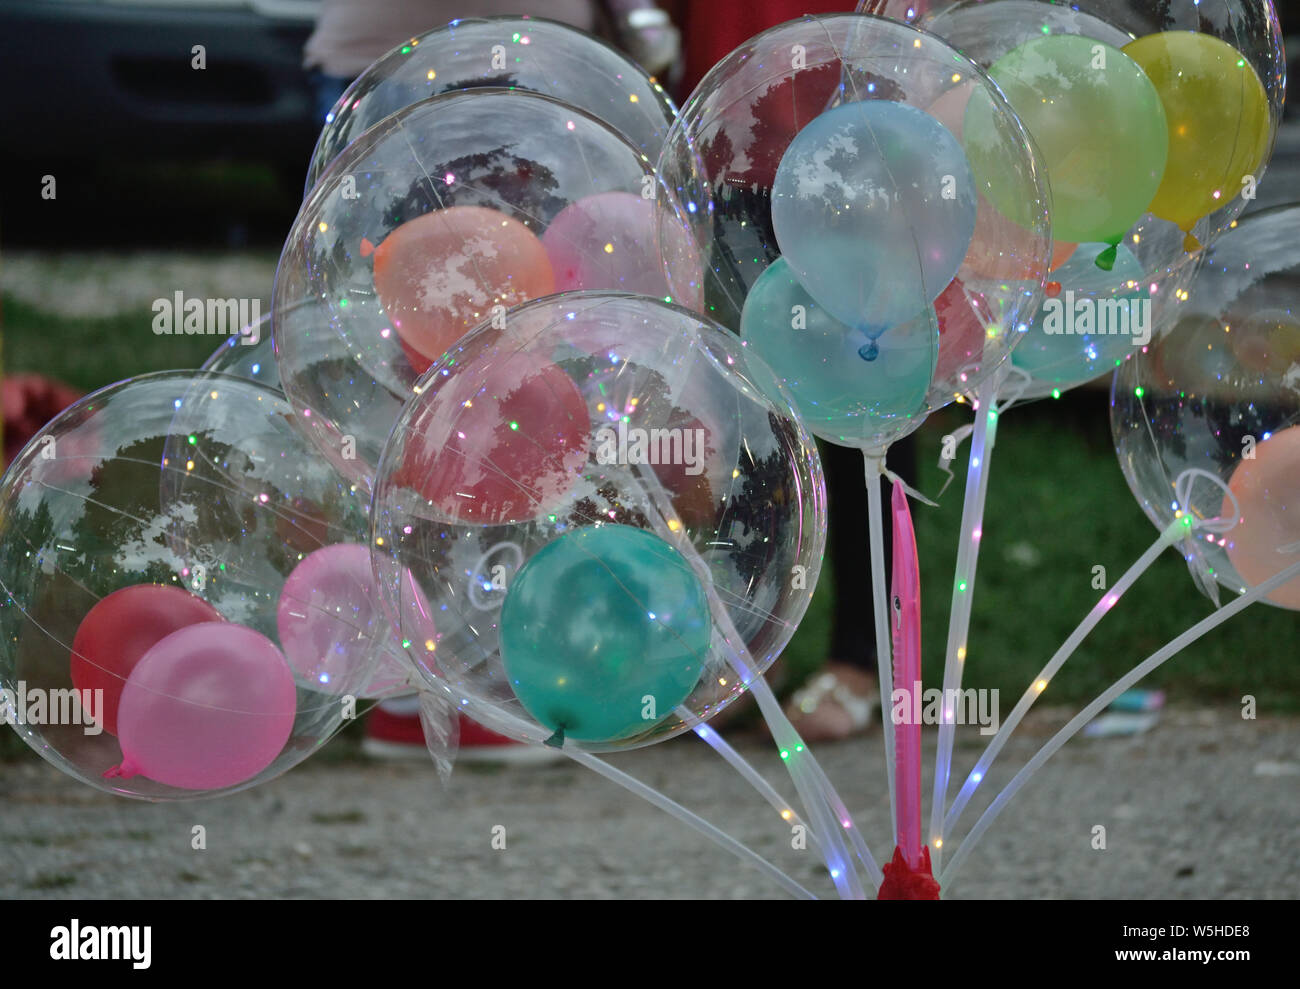 Klar transparent Helium Luftballons mit Multi-color Licht und farbigen Luftballons innen Stockfoto